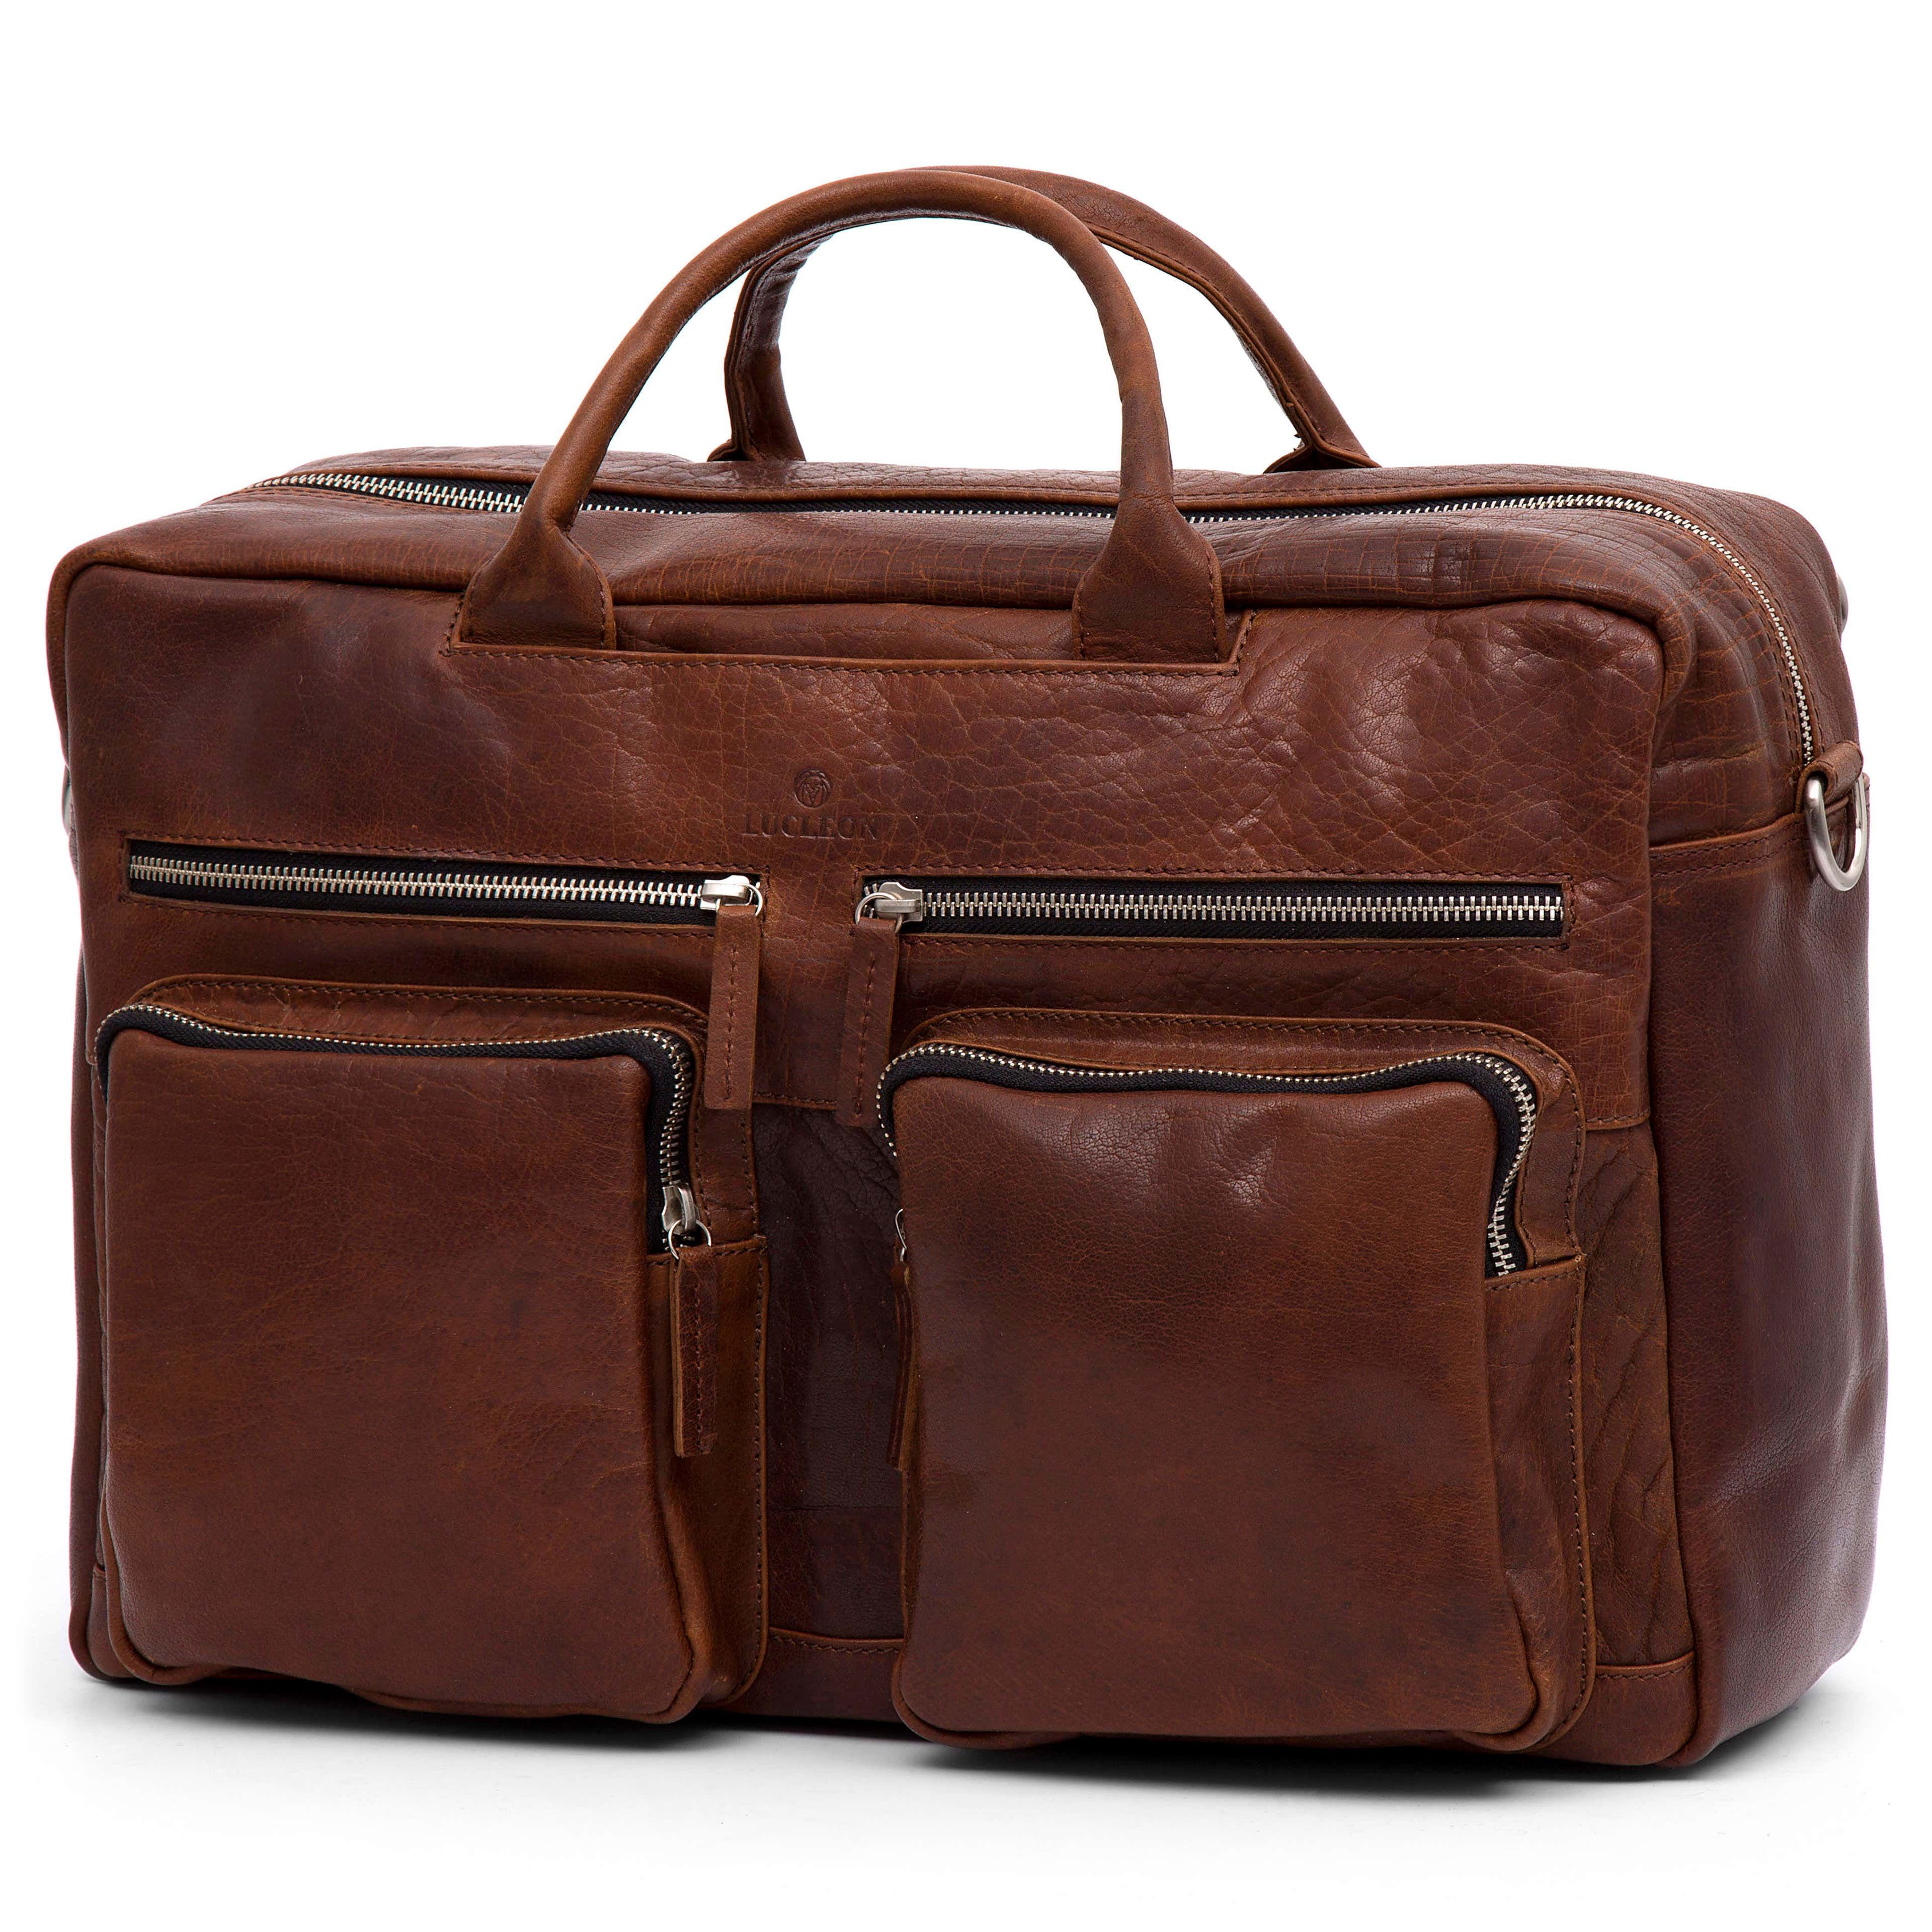 Montreal Combi Tan Leather Travel Bag